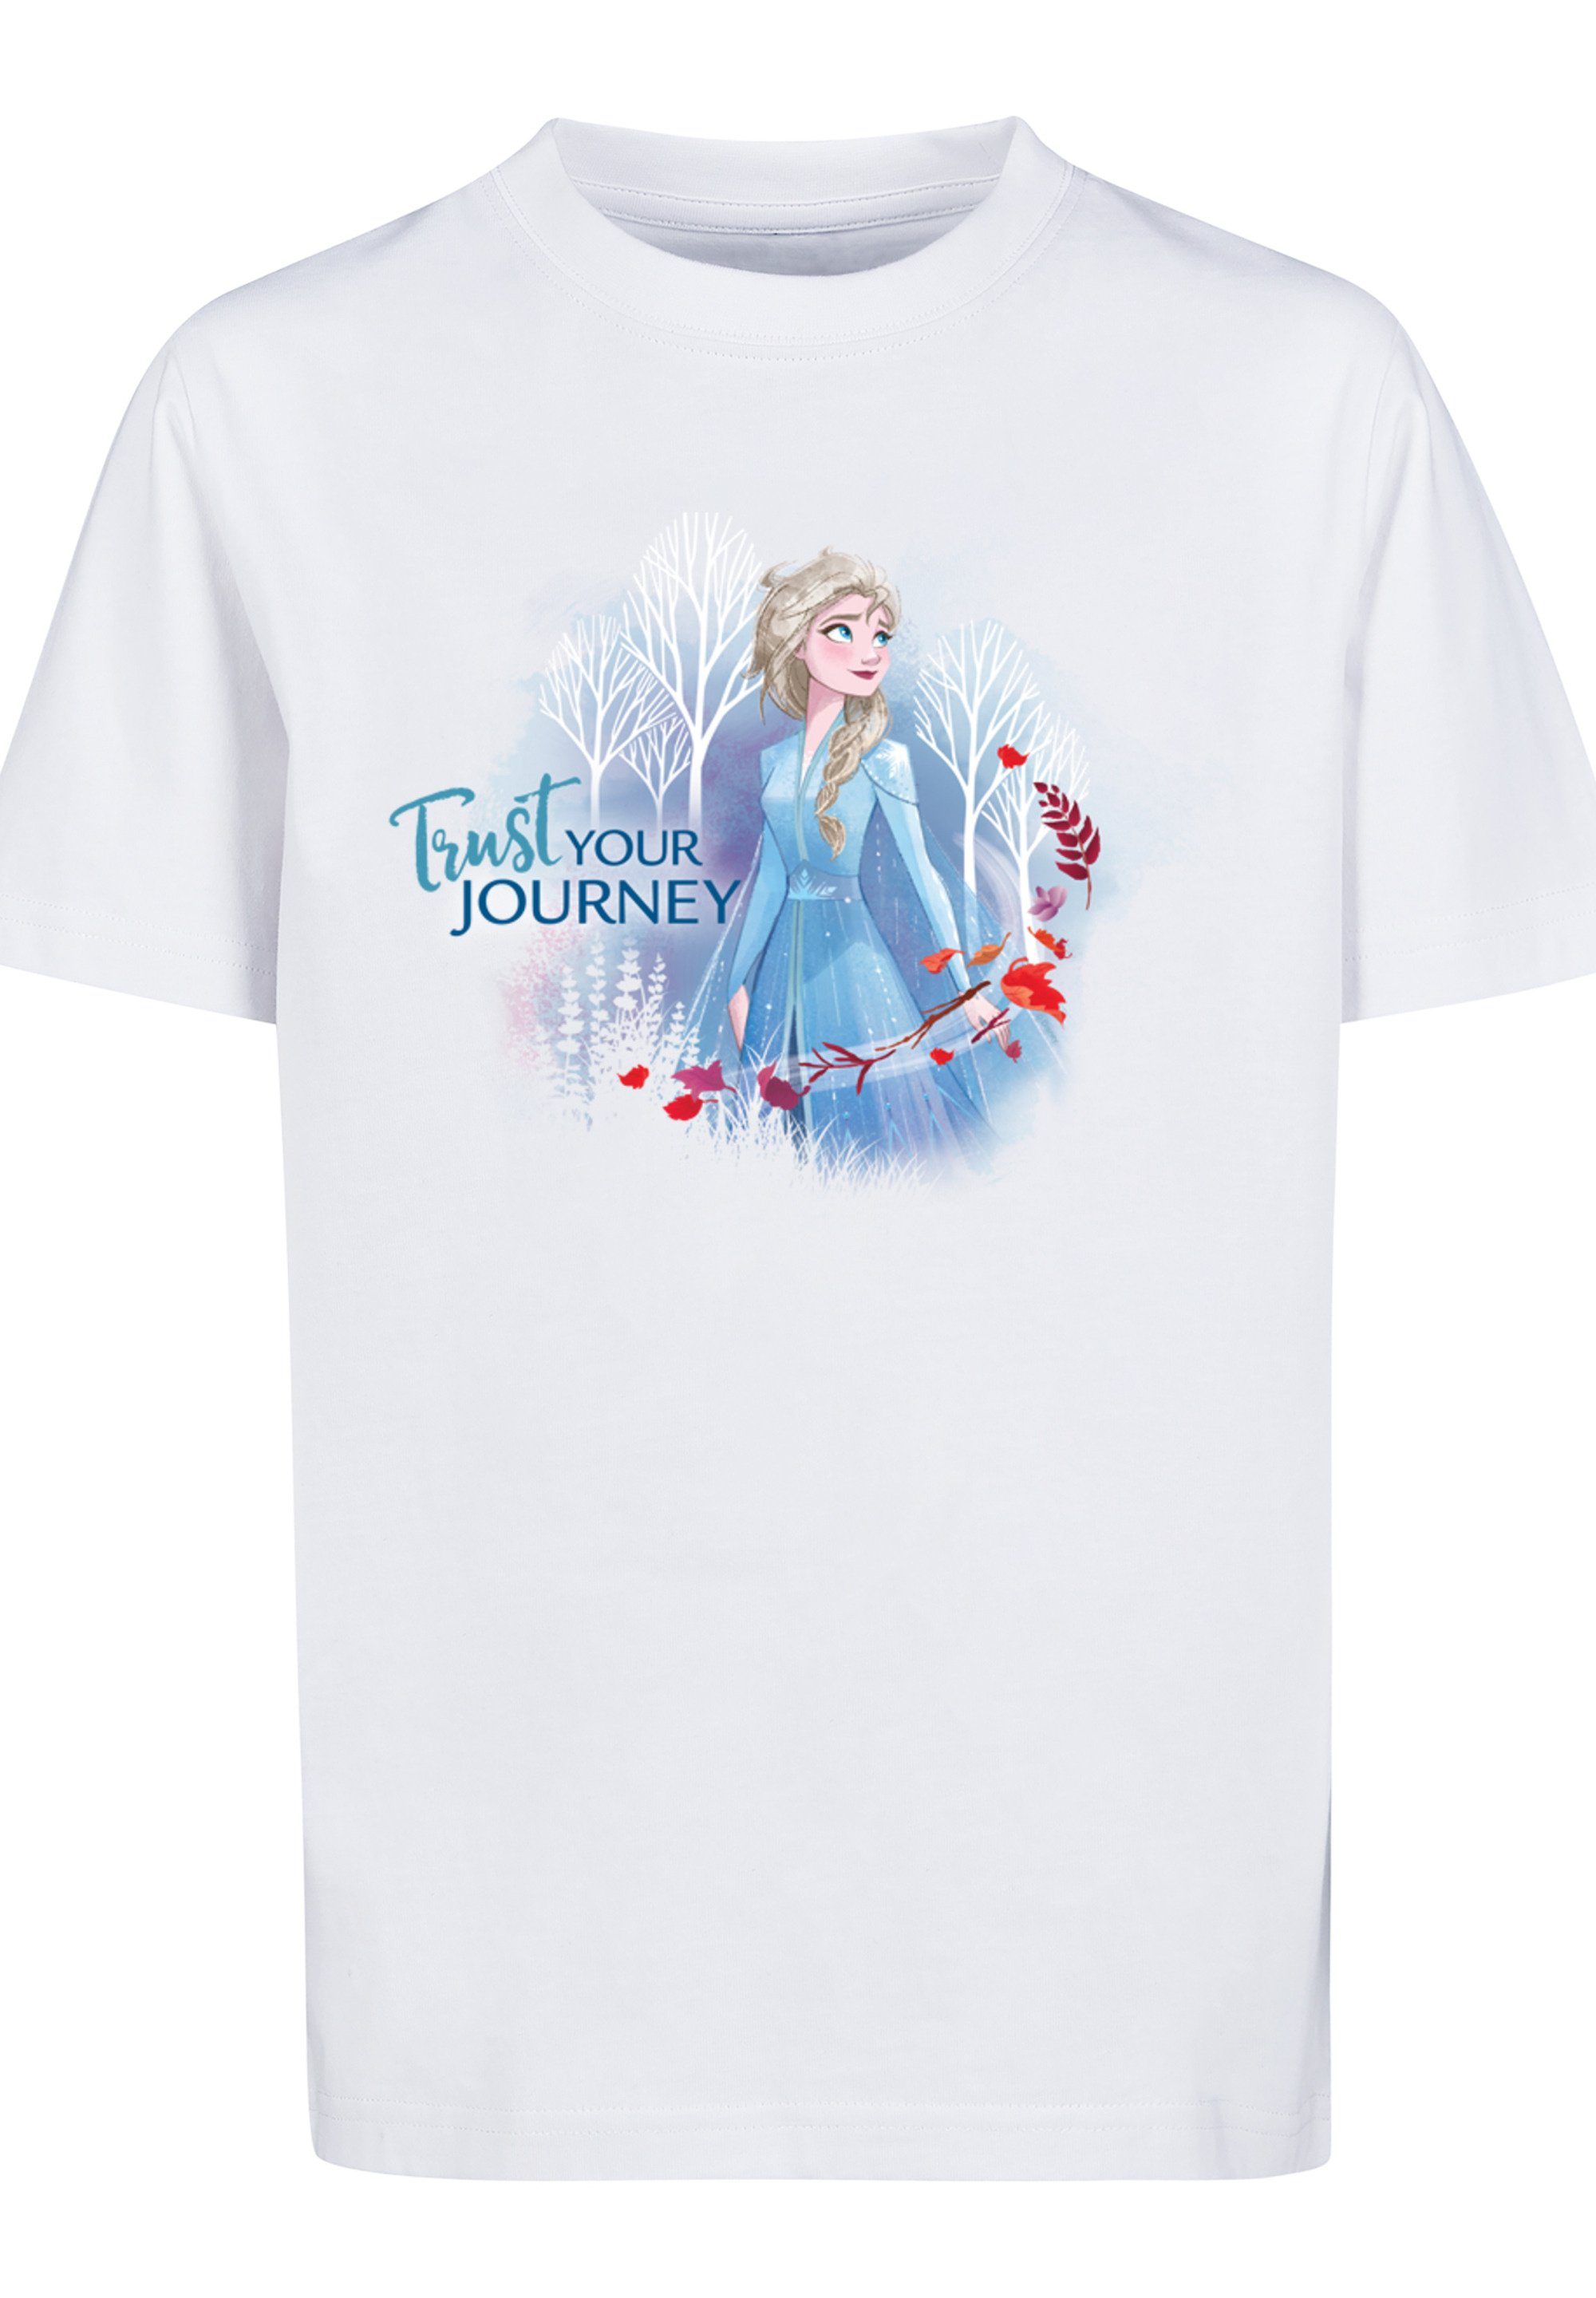 T-Shirt Frozen Your Print Journey weiß Disney Trust F4NT4STIC 2